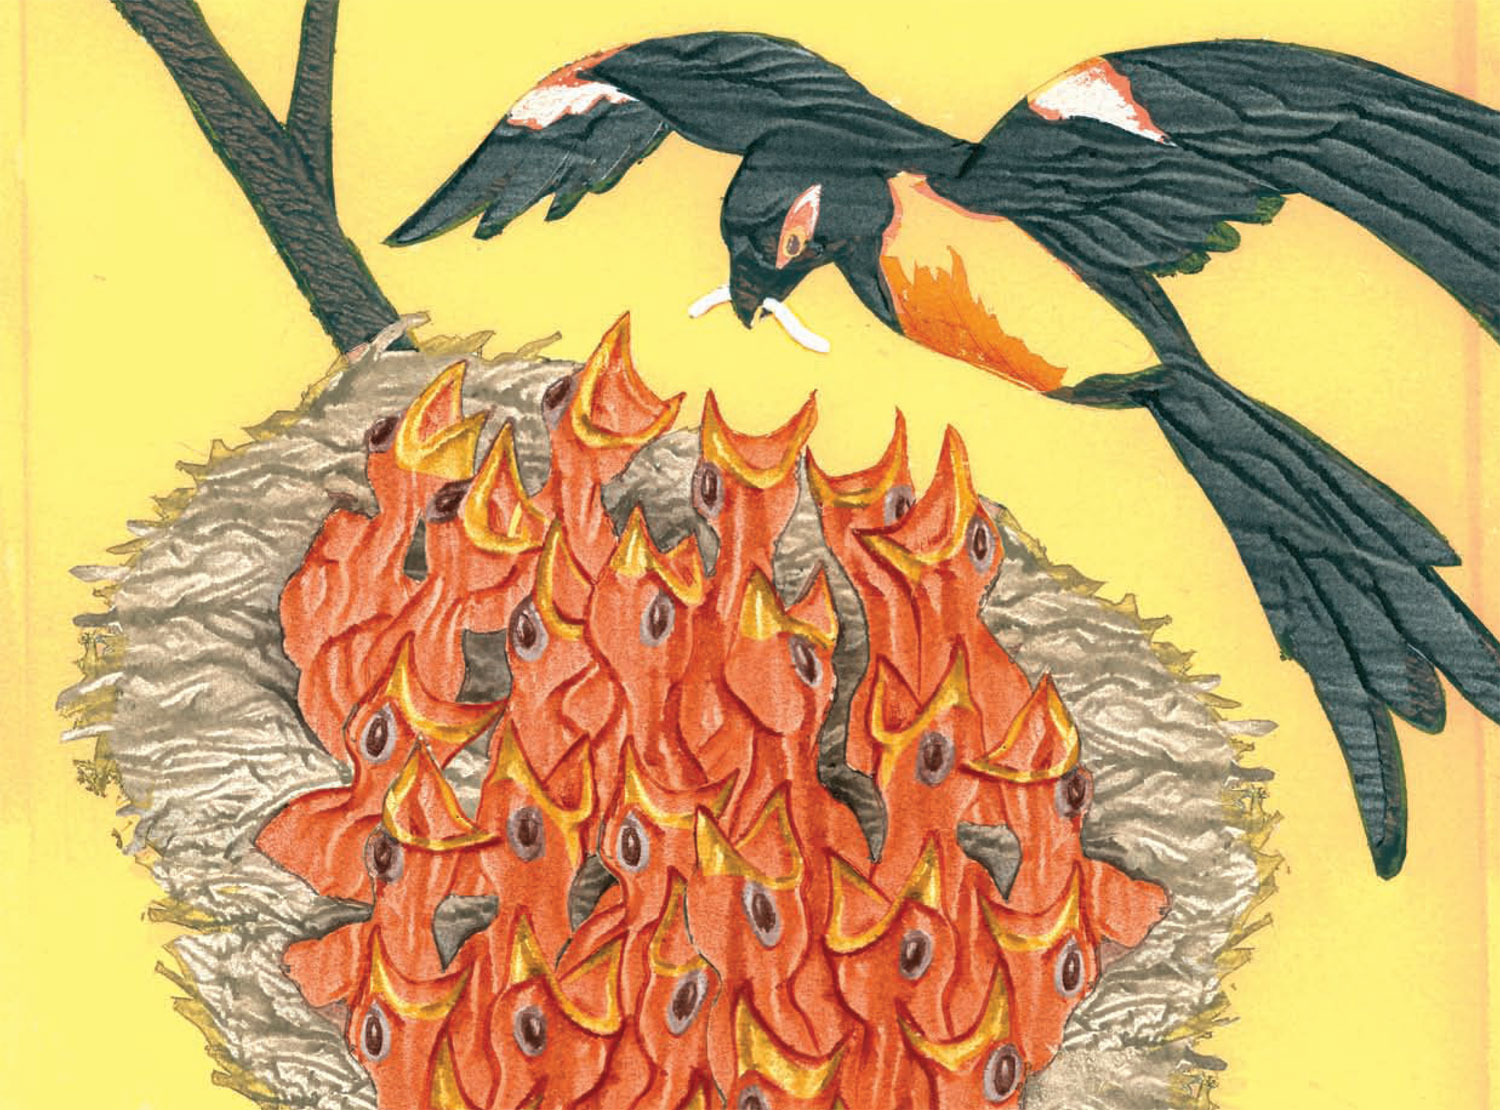 Illustration by Alex Nabaum of bird feeding worm to overcrowded nest